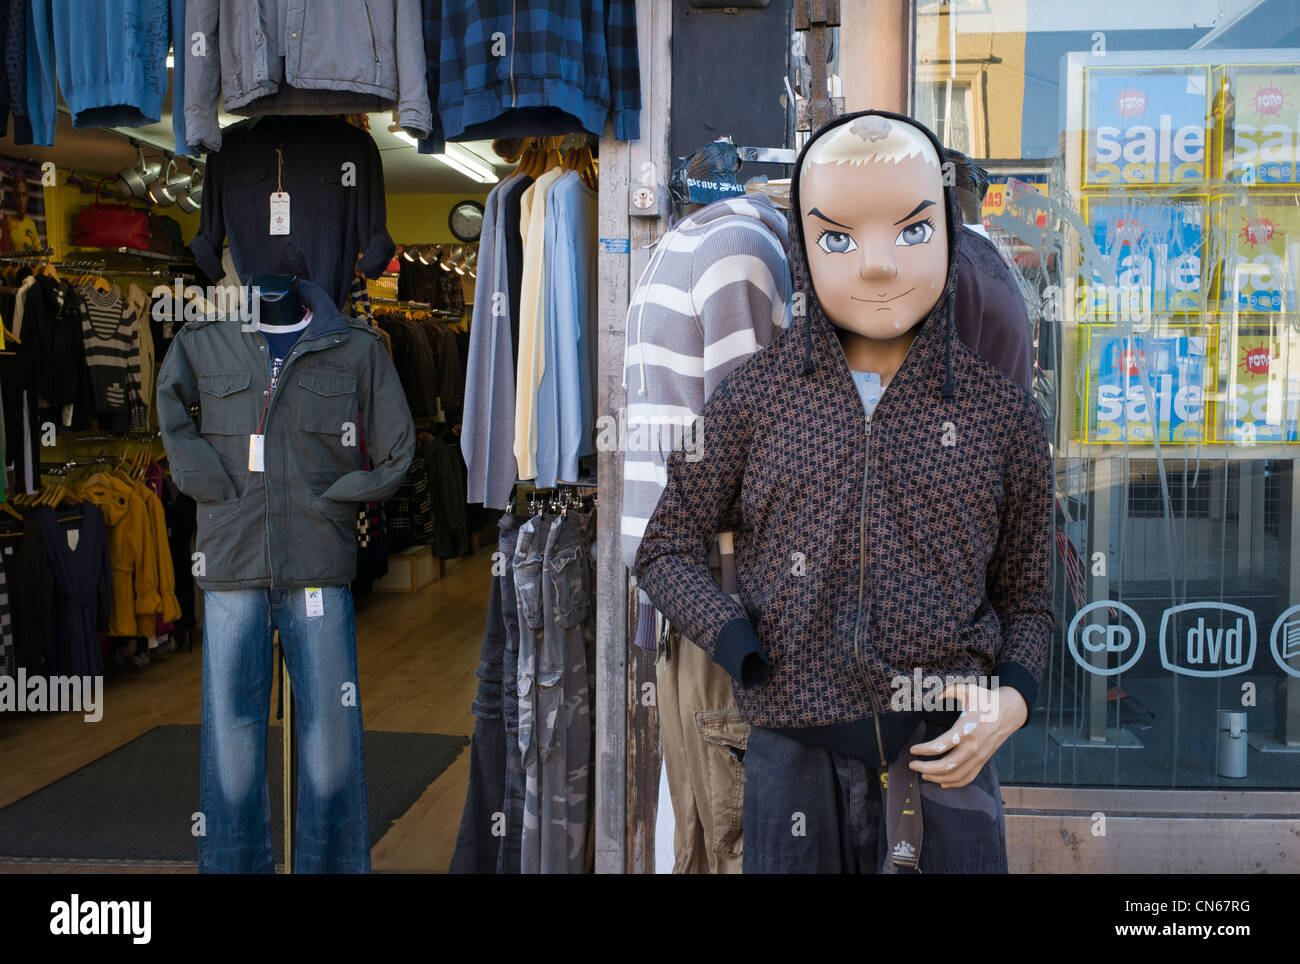 Dressed mannequins, models, outside cloths shops in Camden Market, Camden Town, London UK Stock Photo